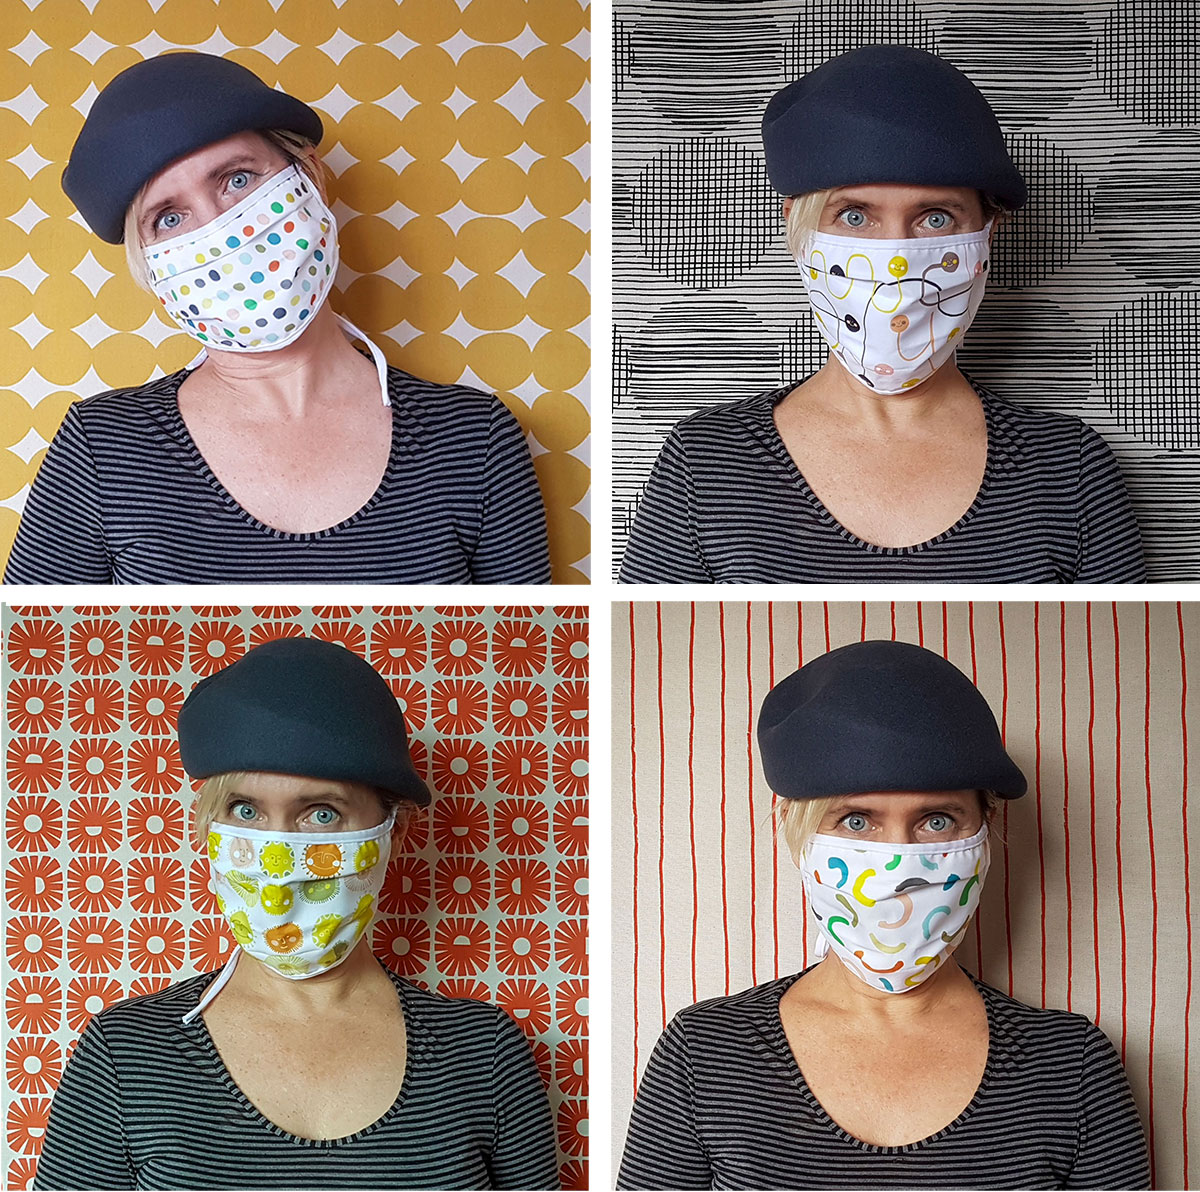 Four masks